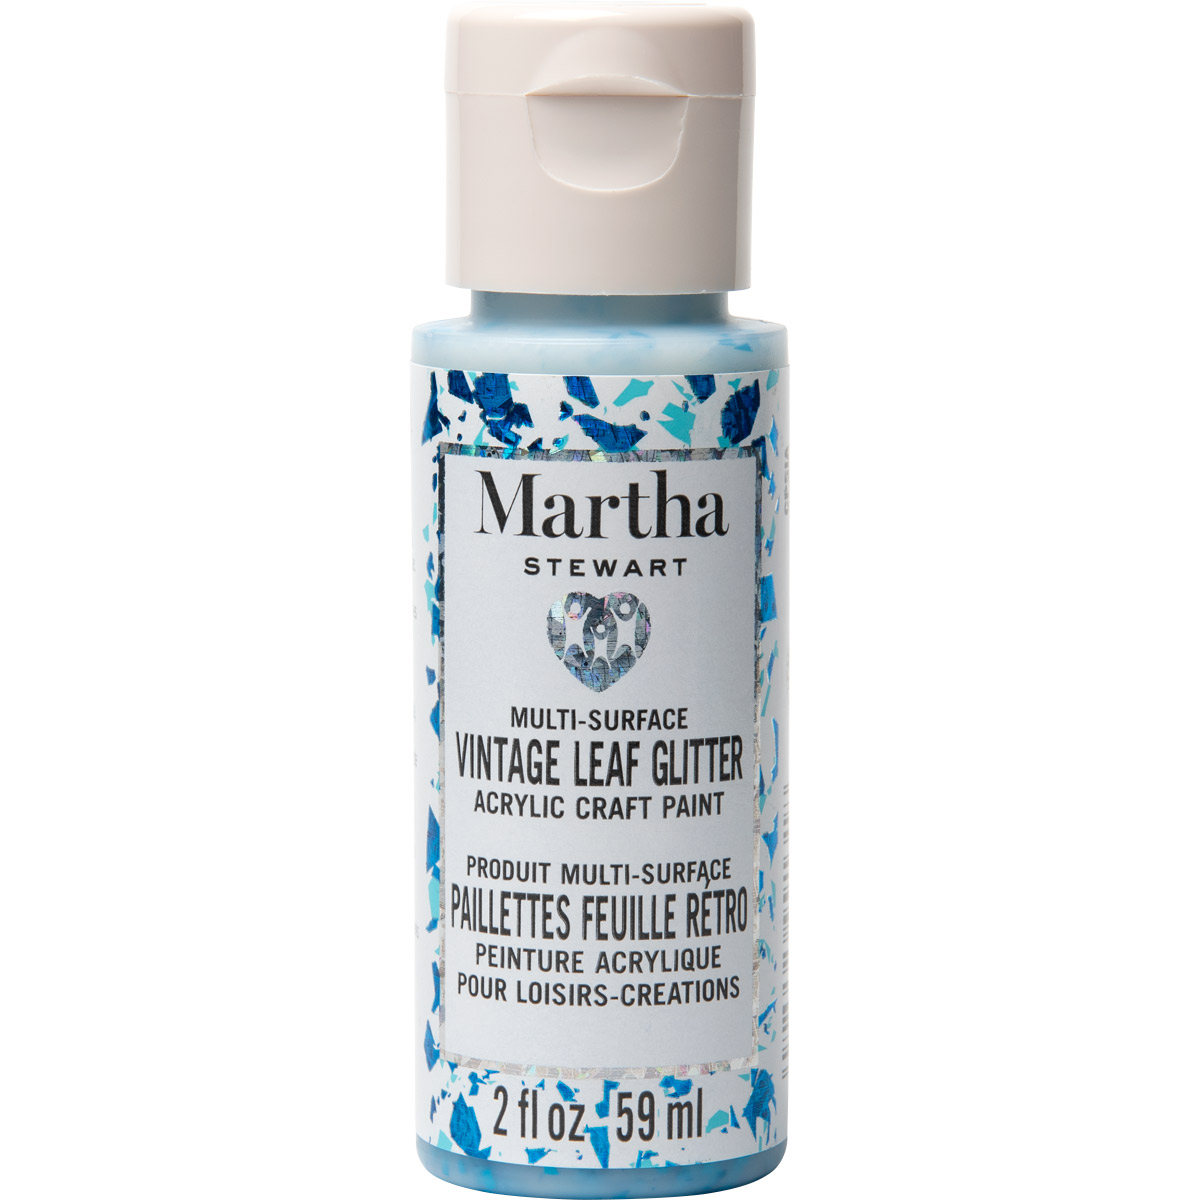 Martha Stewart ® Multi-Surface Vintage Leaf Glitter Acrylic Craft Paint CPSIA - Blue Raspberry, 2 oz